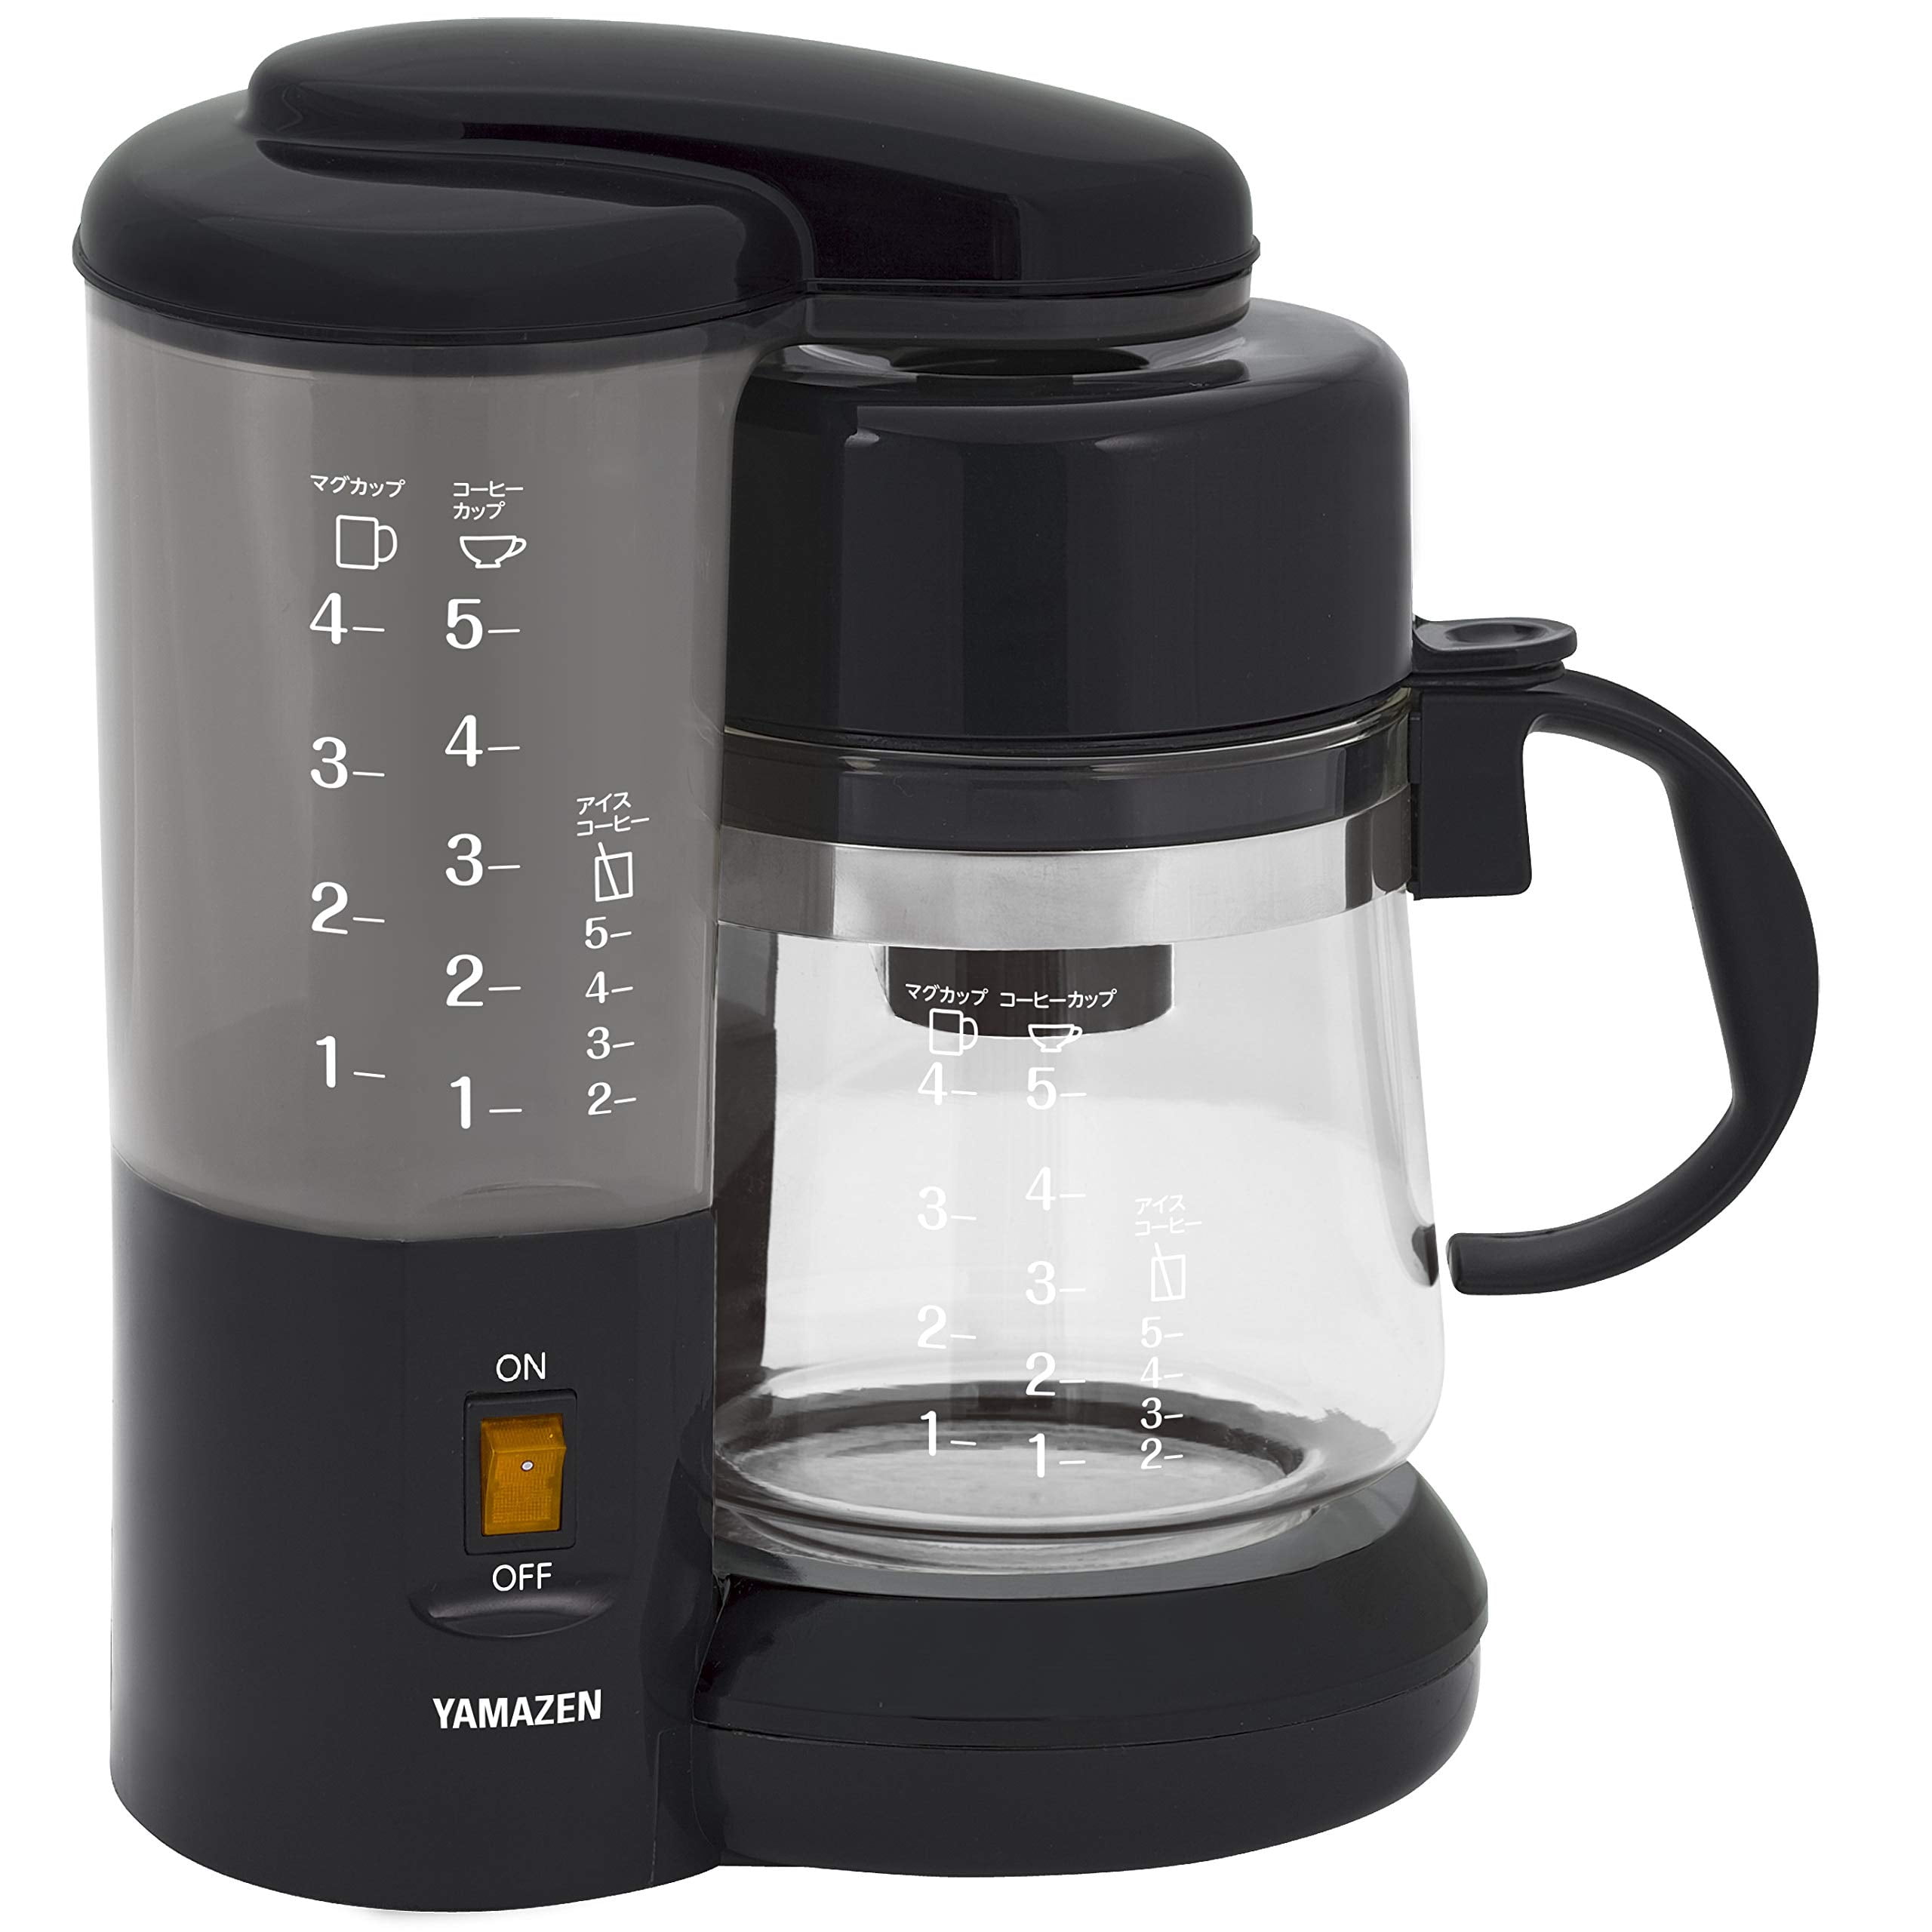 Empstorm 12 Cup Programmable Drip Coffee Maker - 1000W Fast Brew Coffee  Machine with Glass Carafe, Auto Shut Off & 4-Hour Keep Warm, Anti-Drip  System